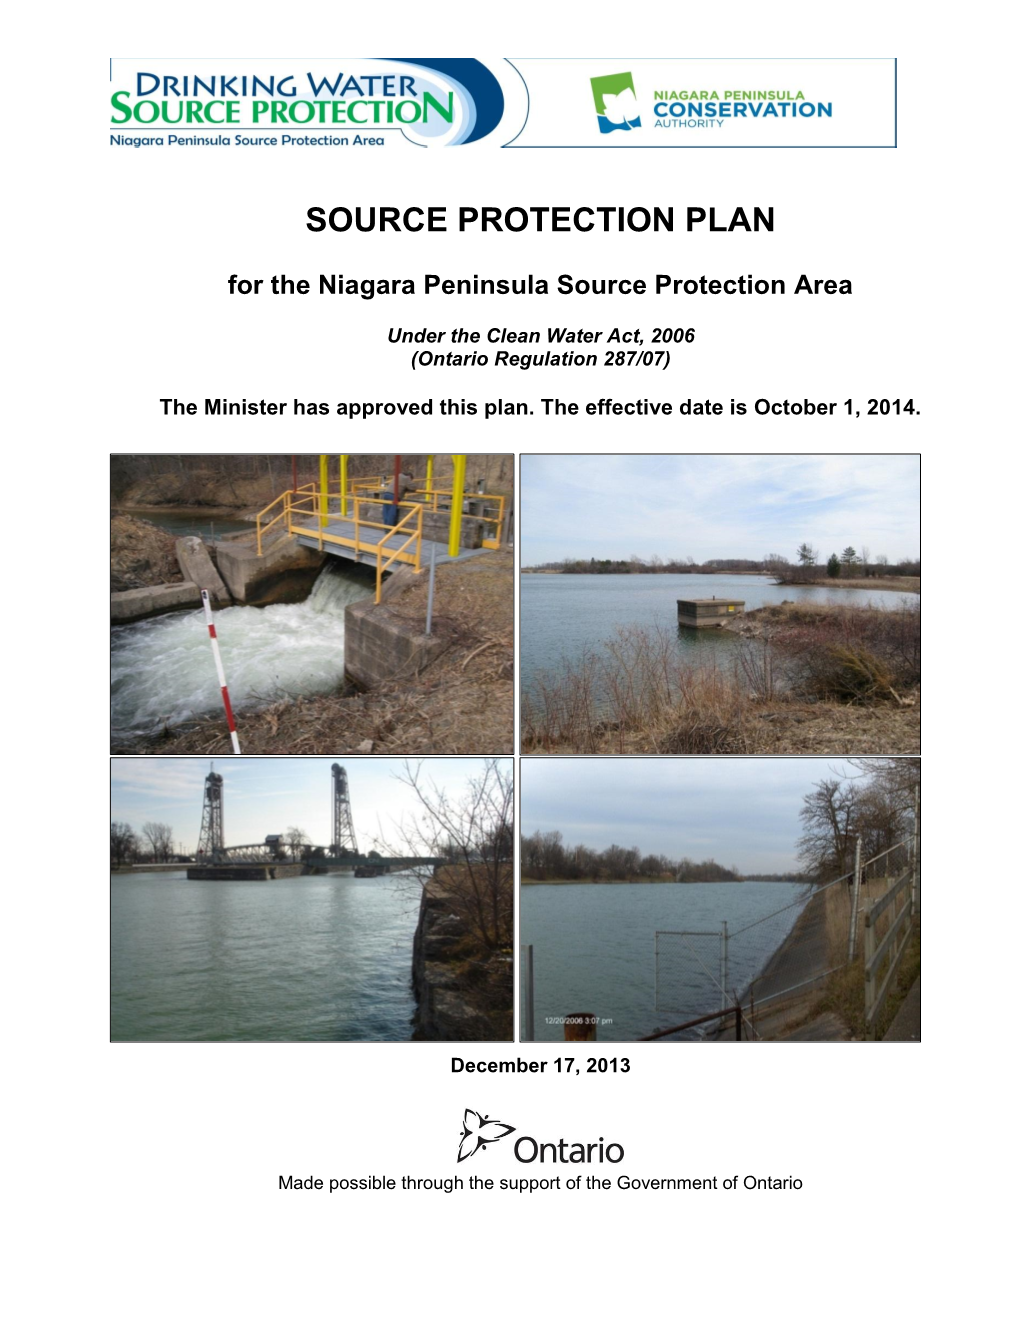 Source Protection Plan